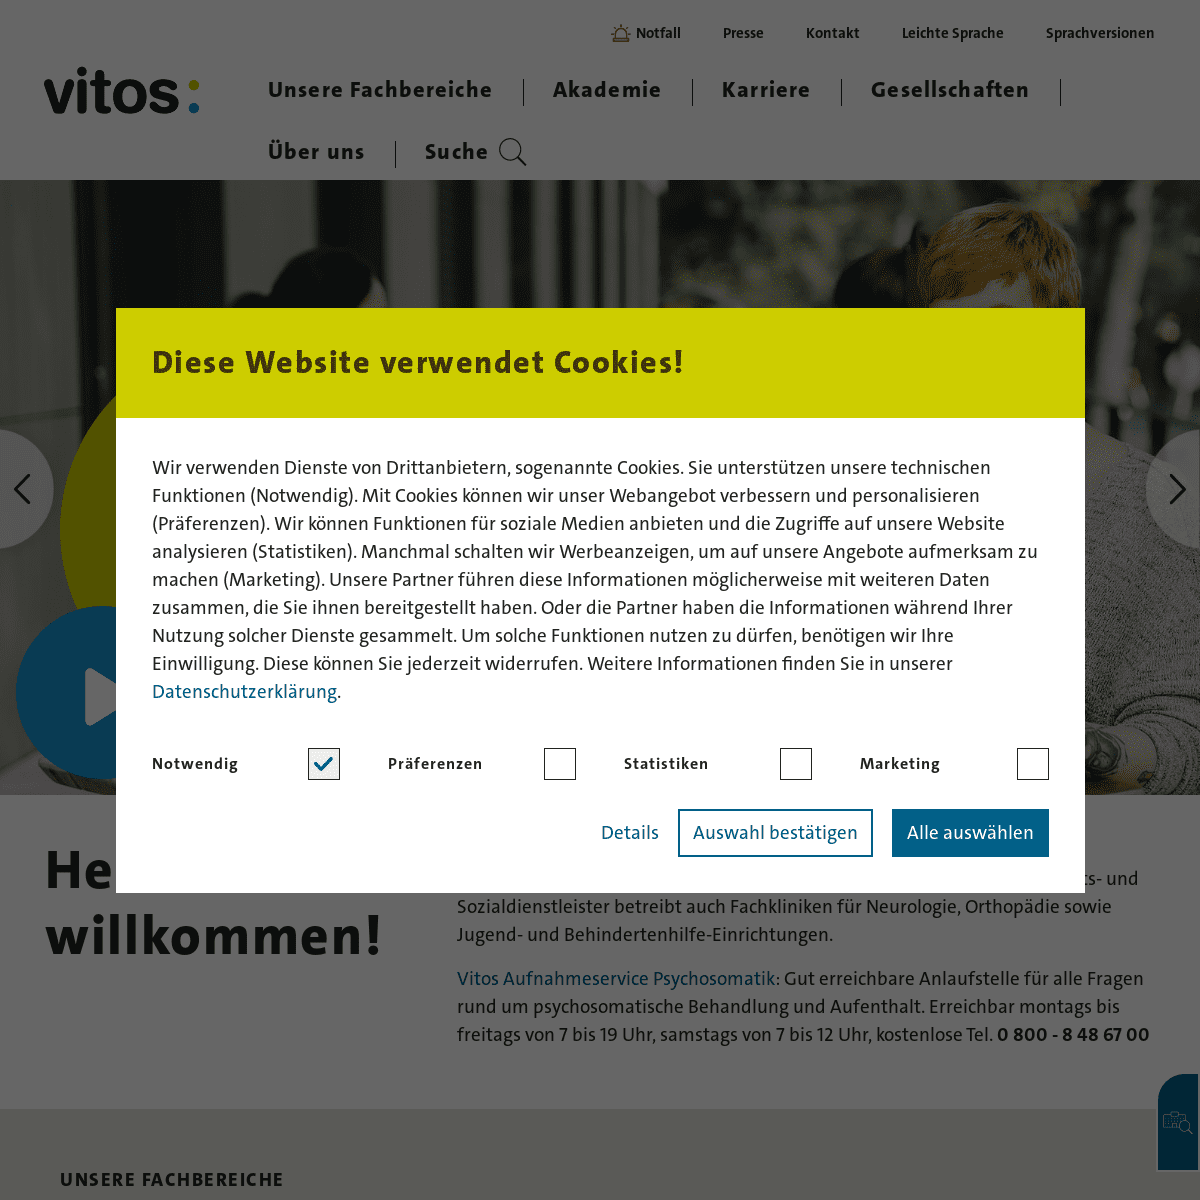 A complete backup of https://vitos.de